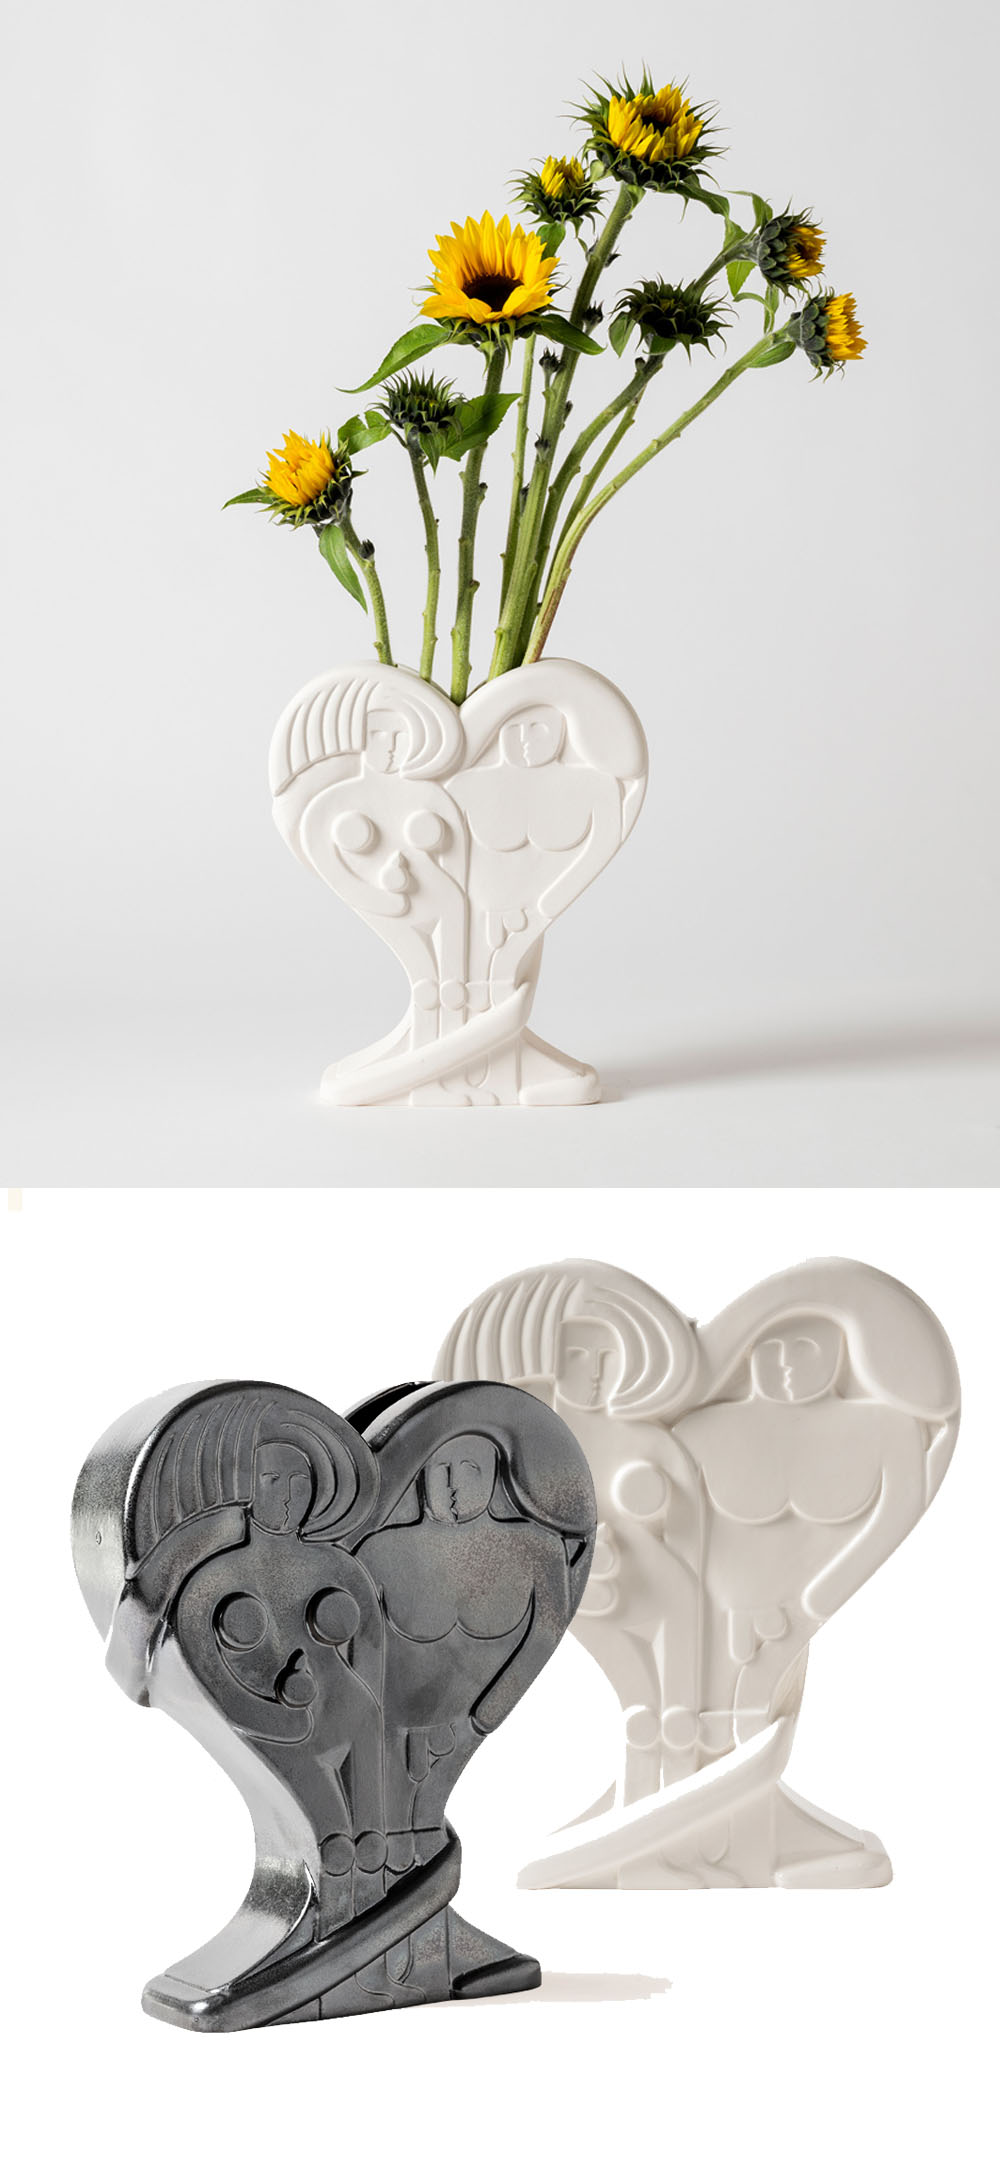 Adam and Eve vases in white or metallic by Lázaro Rosa-Violán